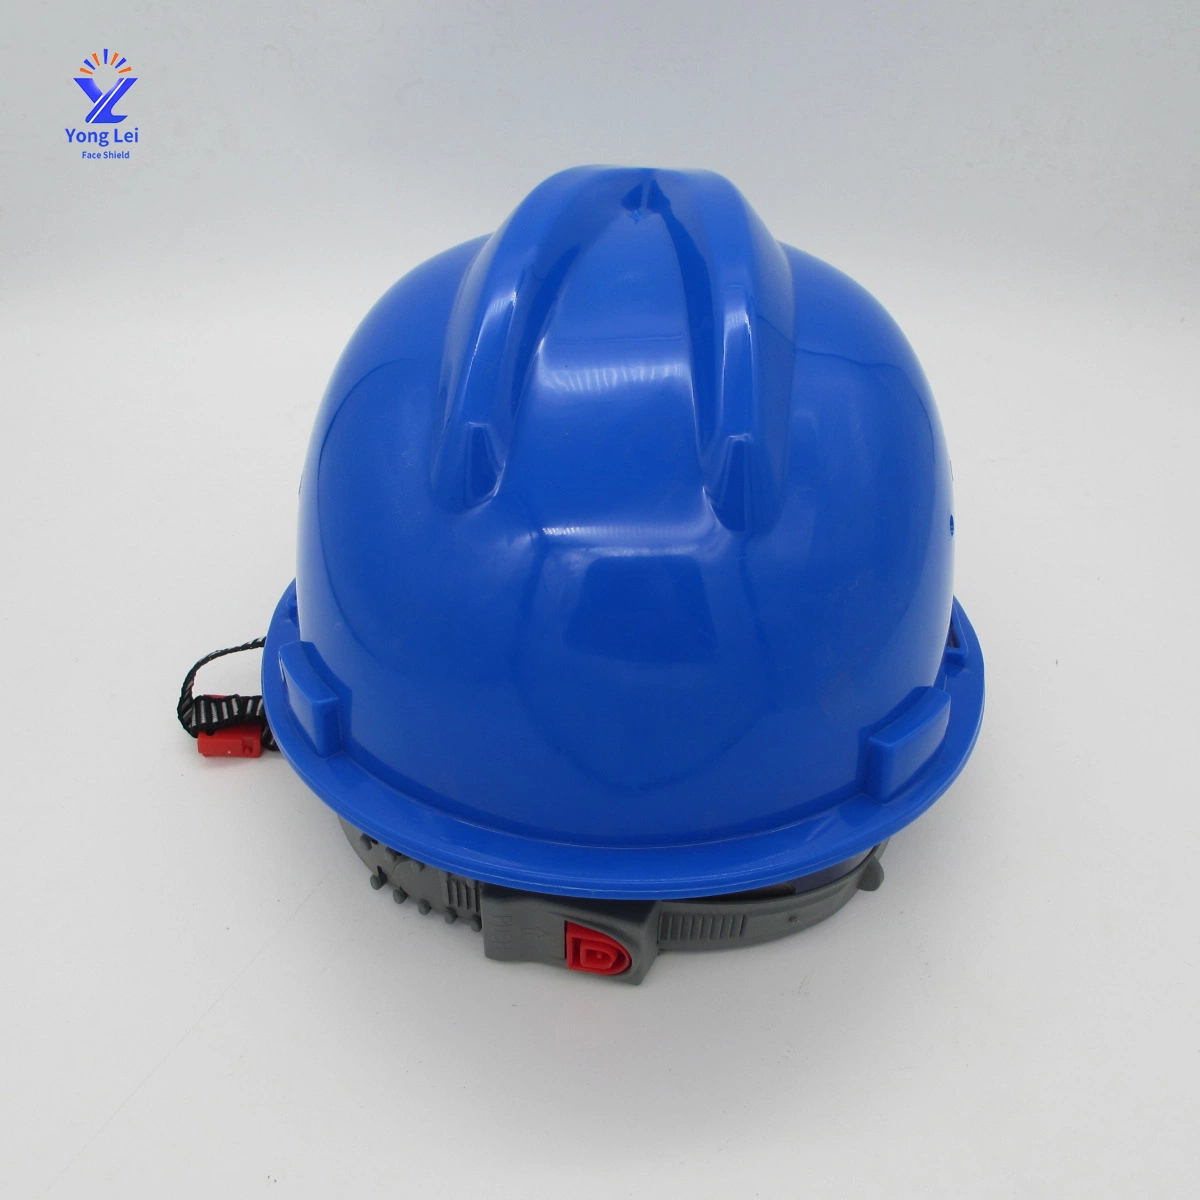 Engineering Protection Sports Safety Helmet Safety Helmet ABS Construction Industry Helmet Mountaineering Helmet